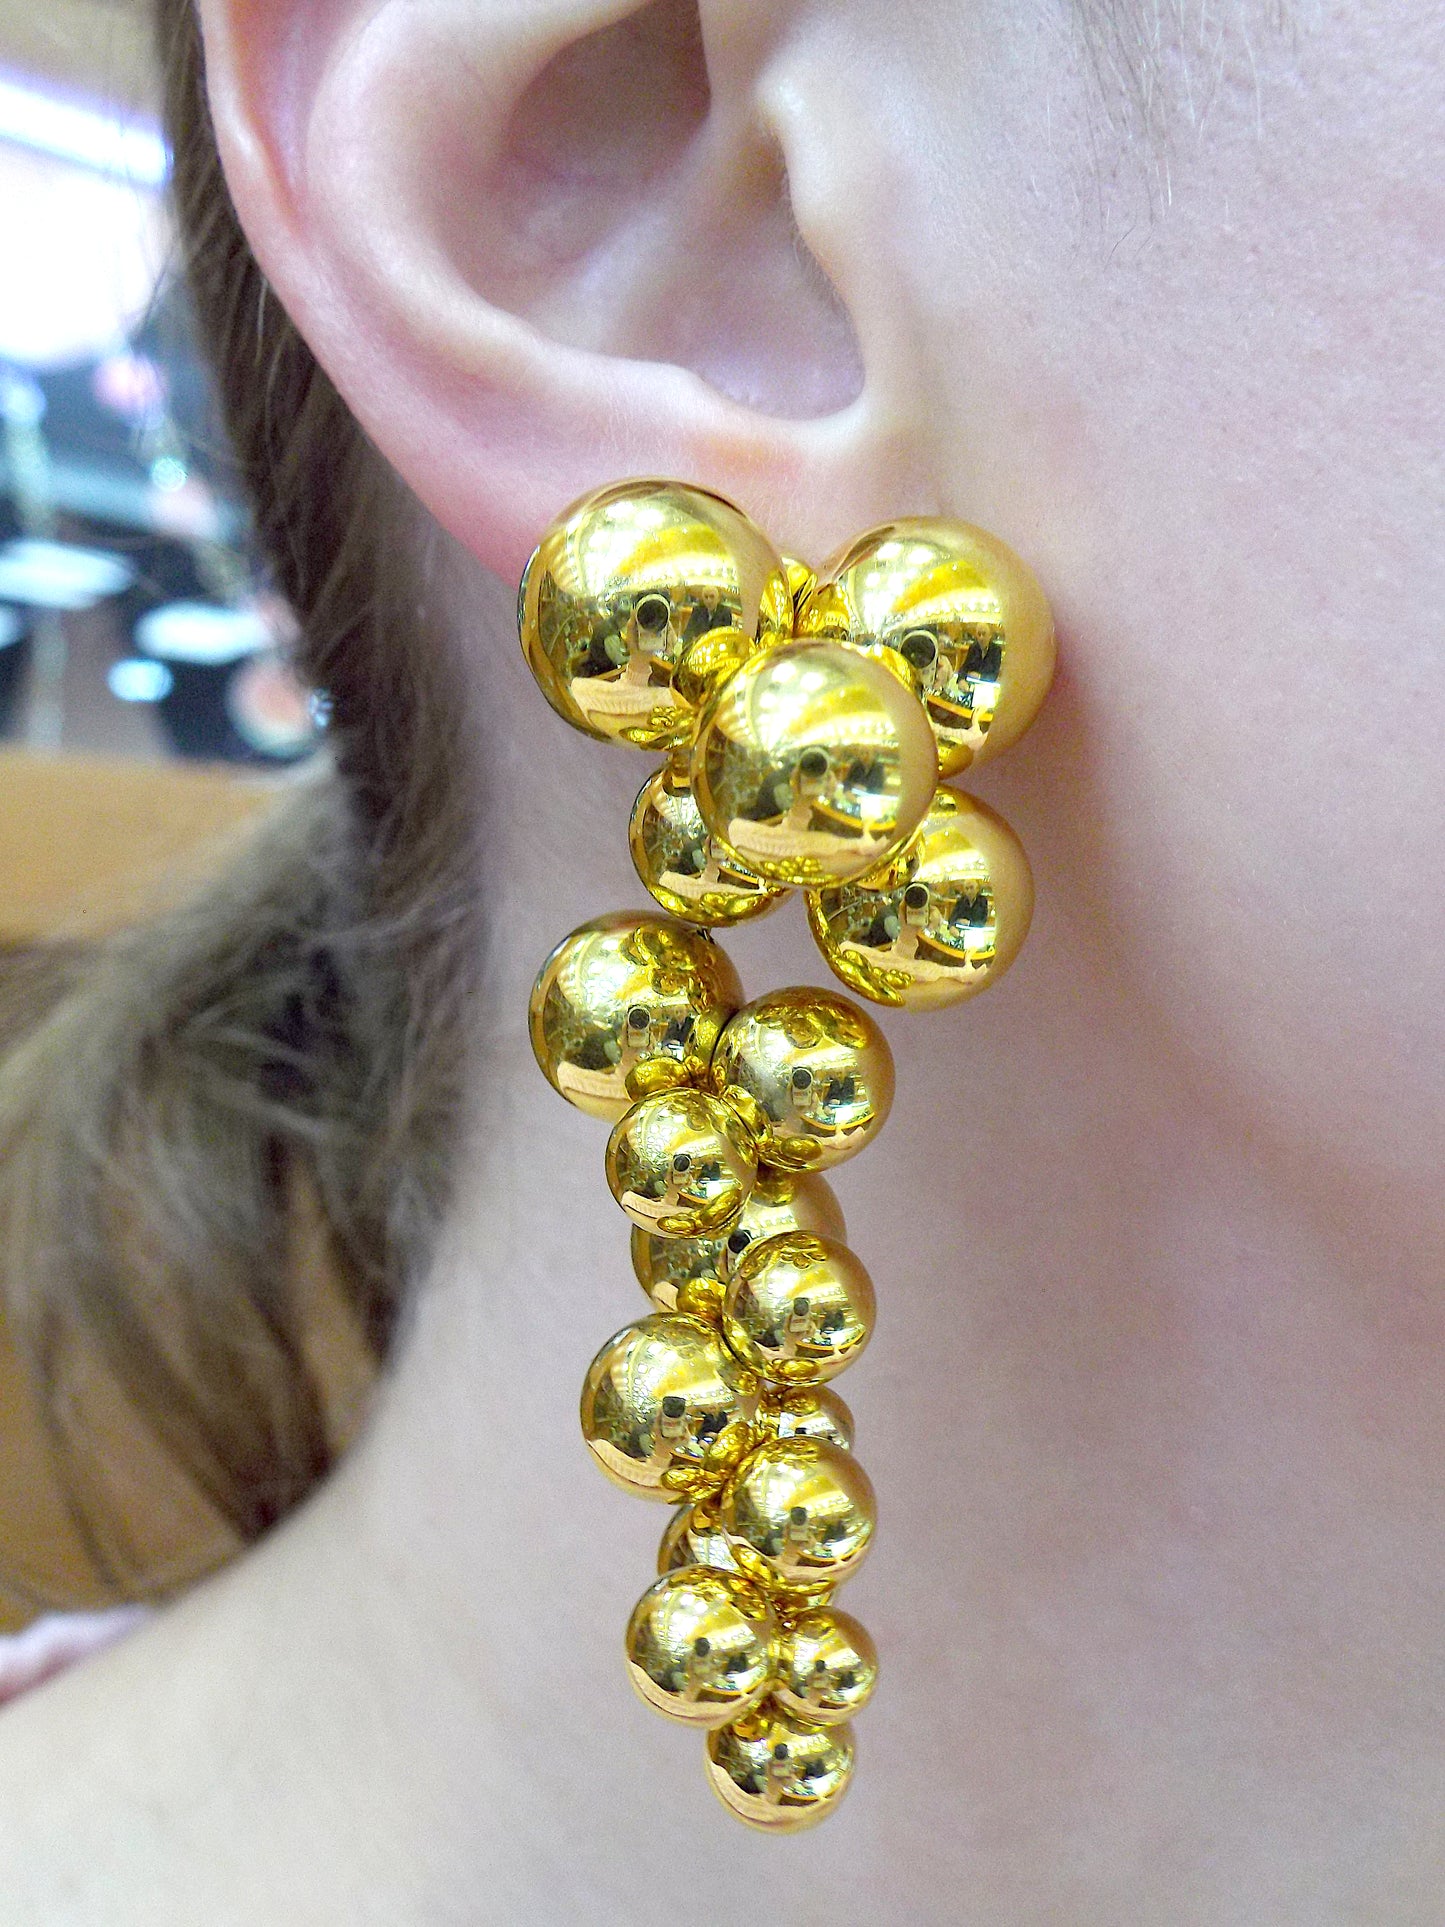 Marina B 'Atomo' 18K Gold Earrings